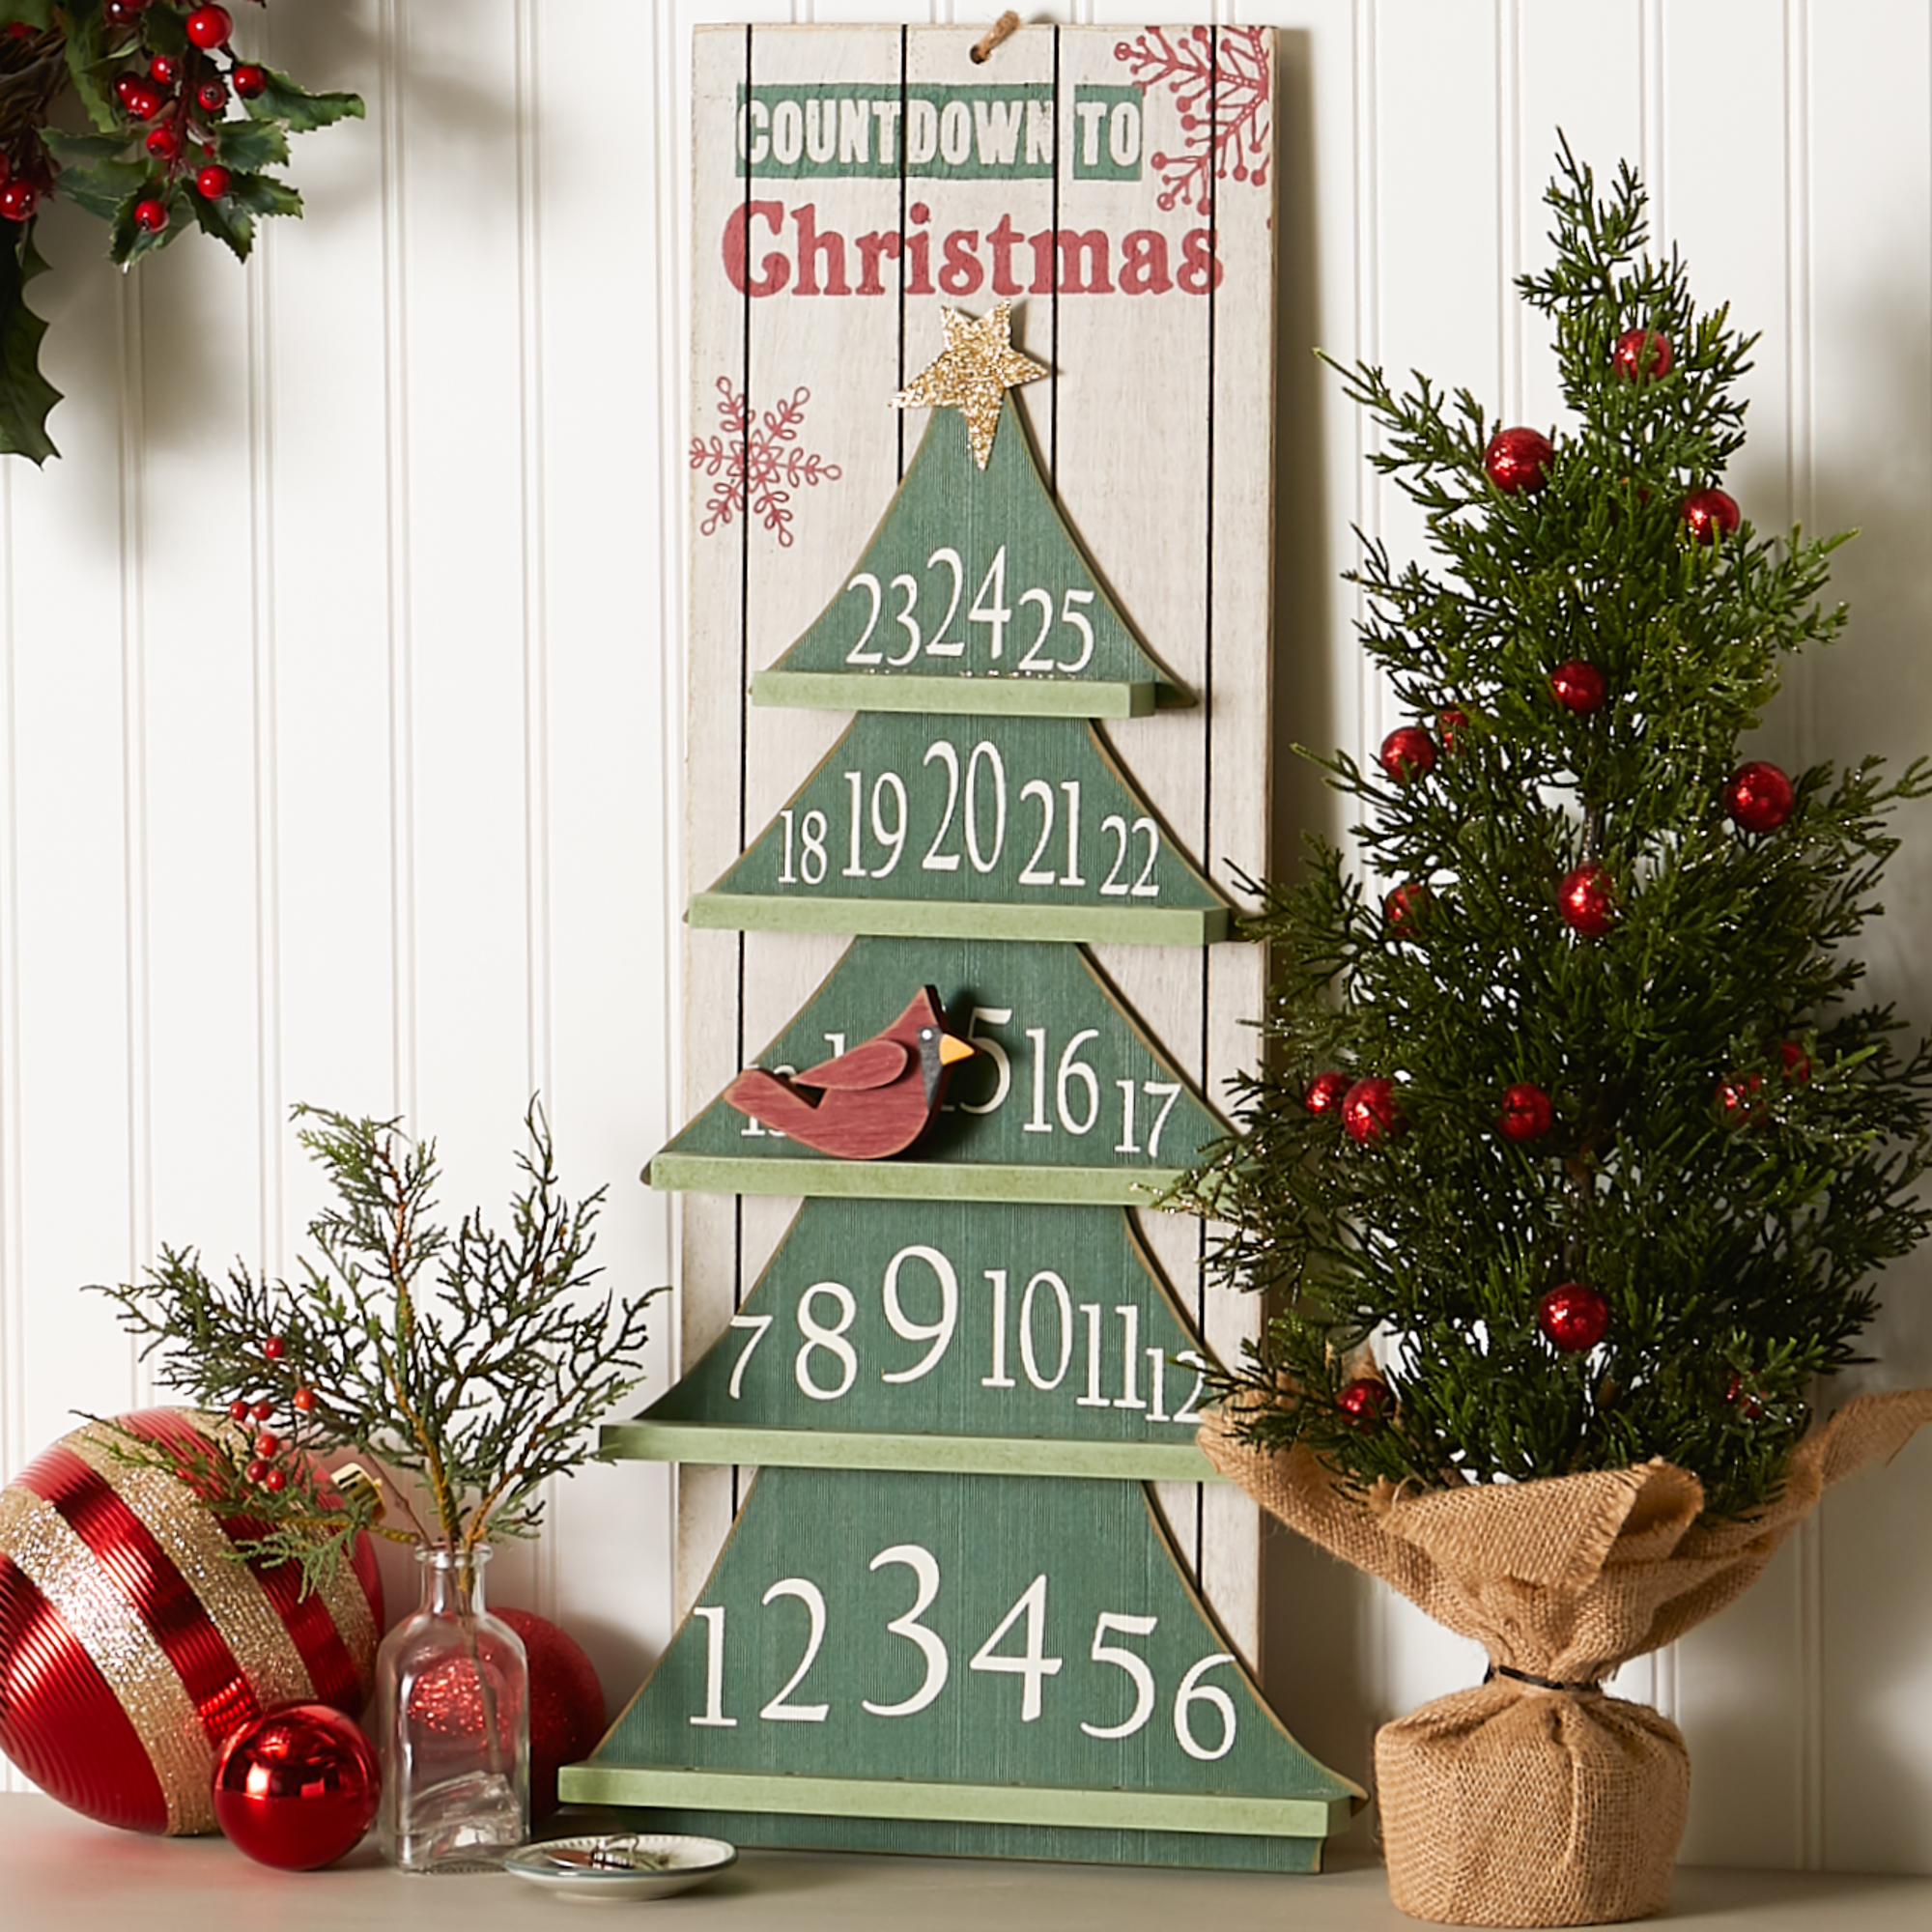 Countdown To Christmas Tree Calendar Wall Sign - image 2 of 3